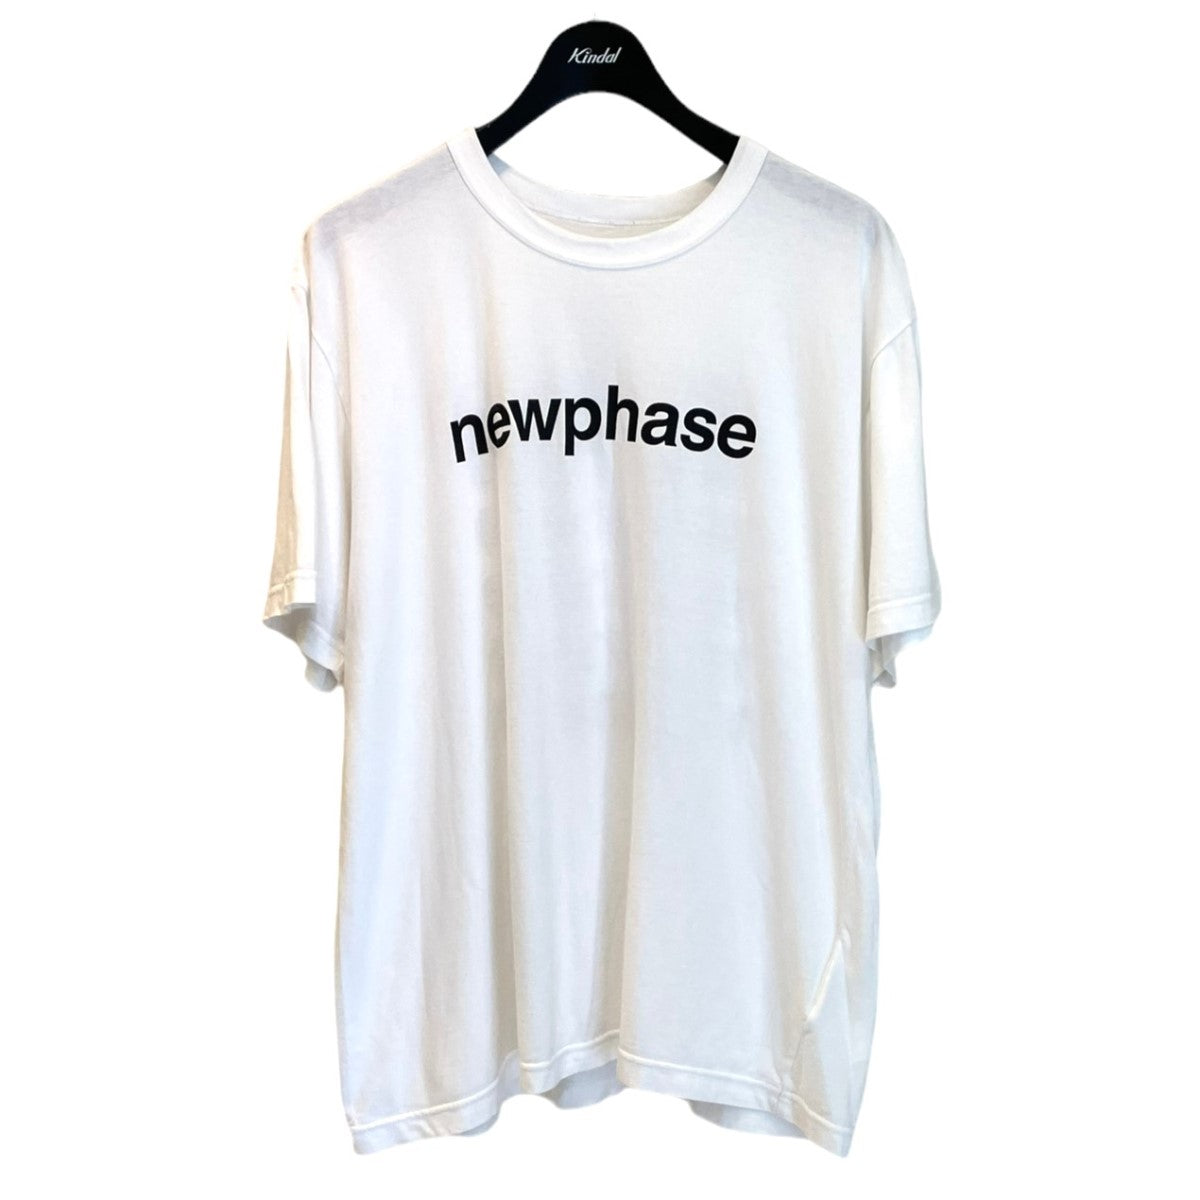 sacai(サカイ) newphase オンライン限定Tシャツ ホワイト サイズ 14｜【公式】カインドオルオンライン  ブランド古着・中古通販【kindal】